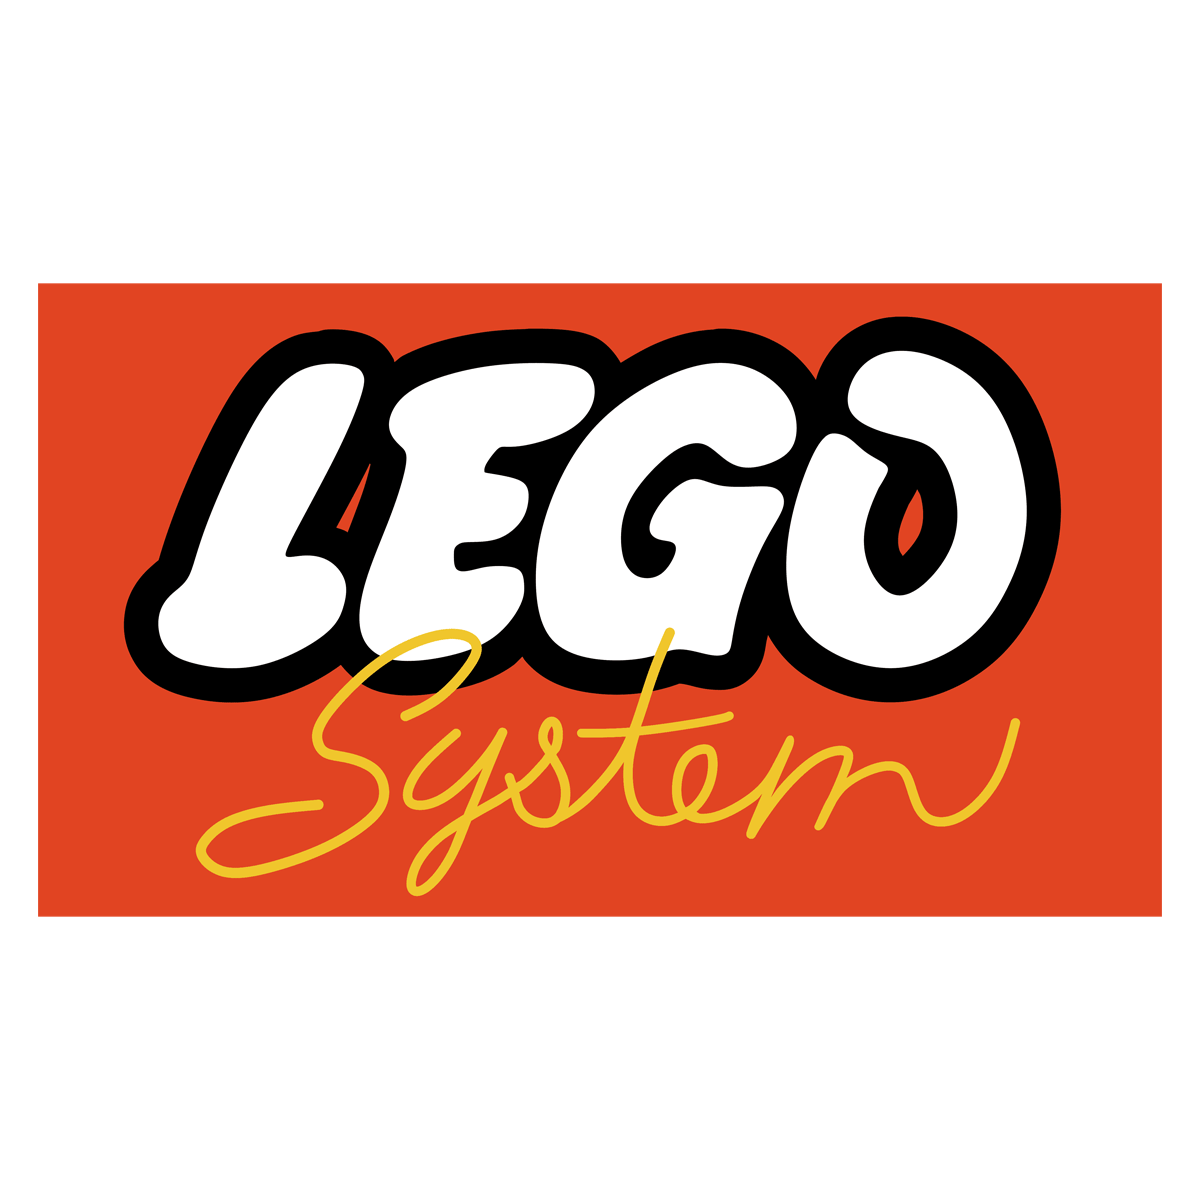 LEGO System Logo 1960-1964 PNG